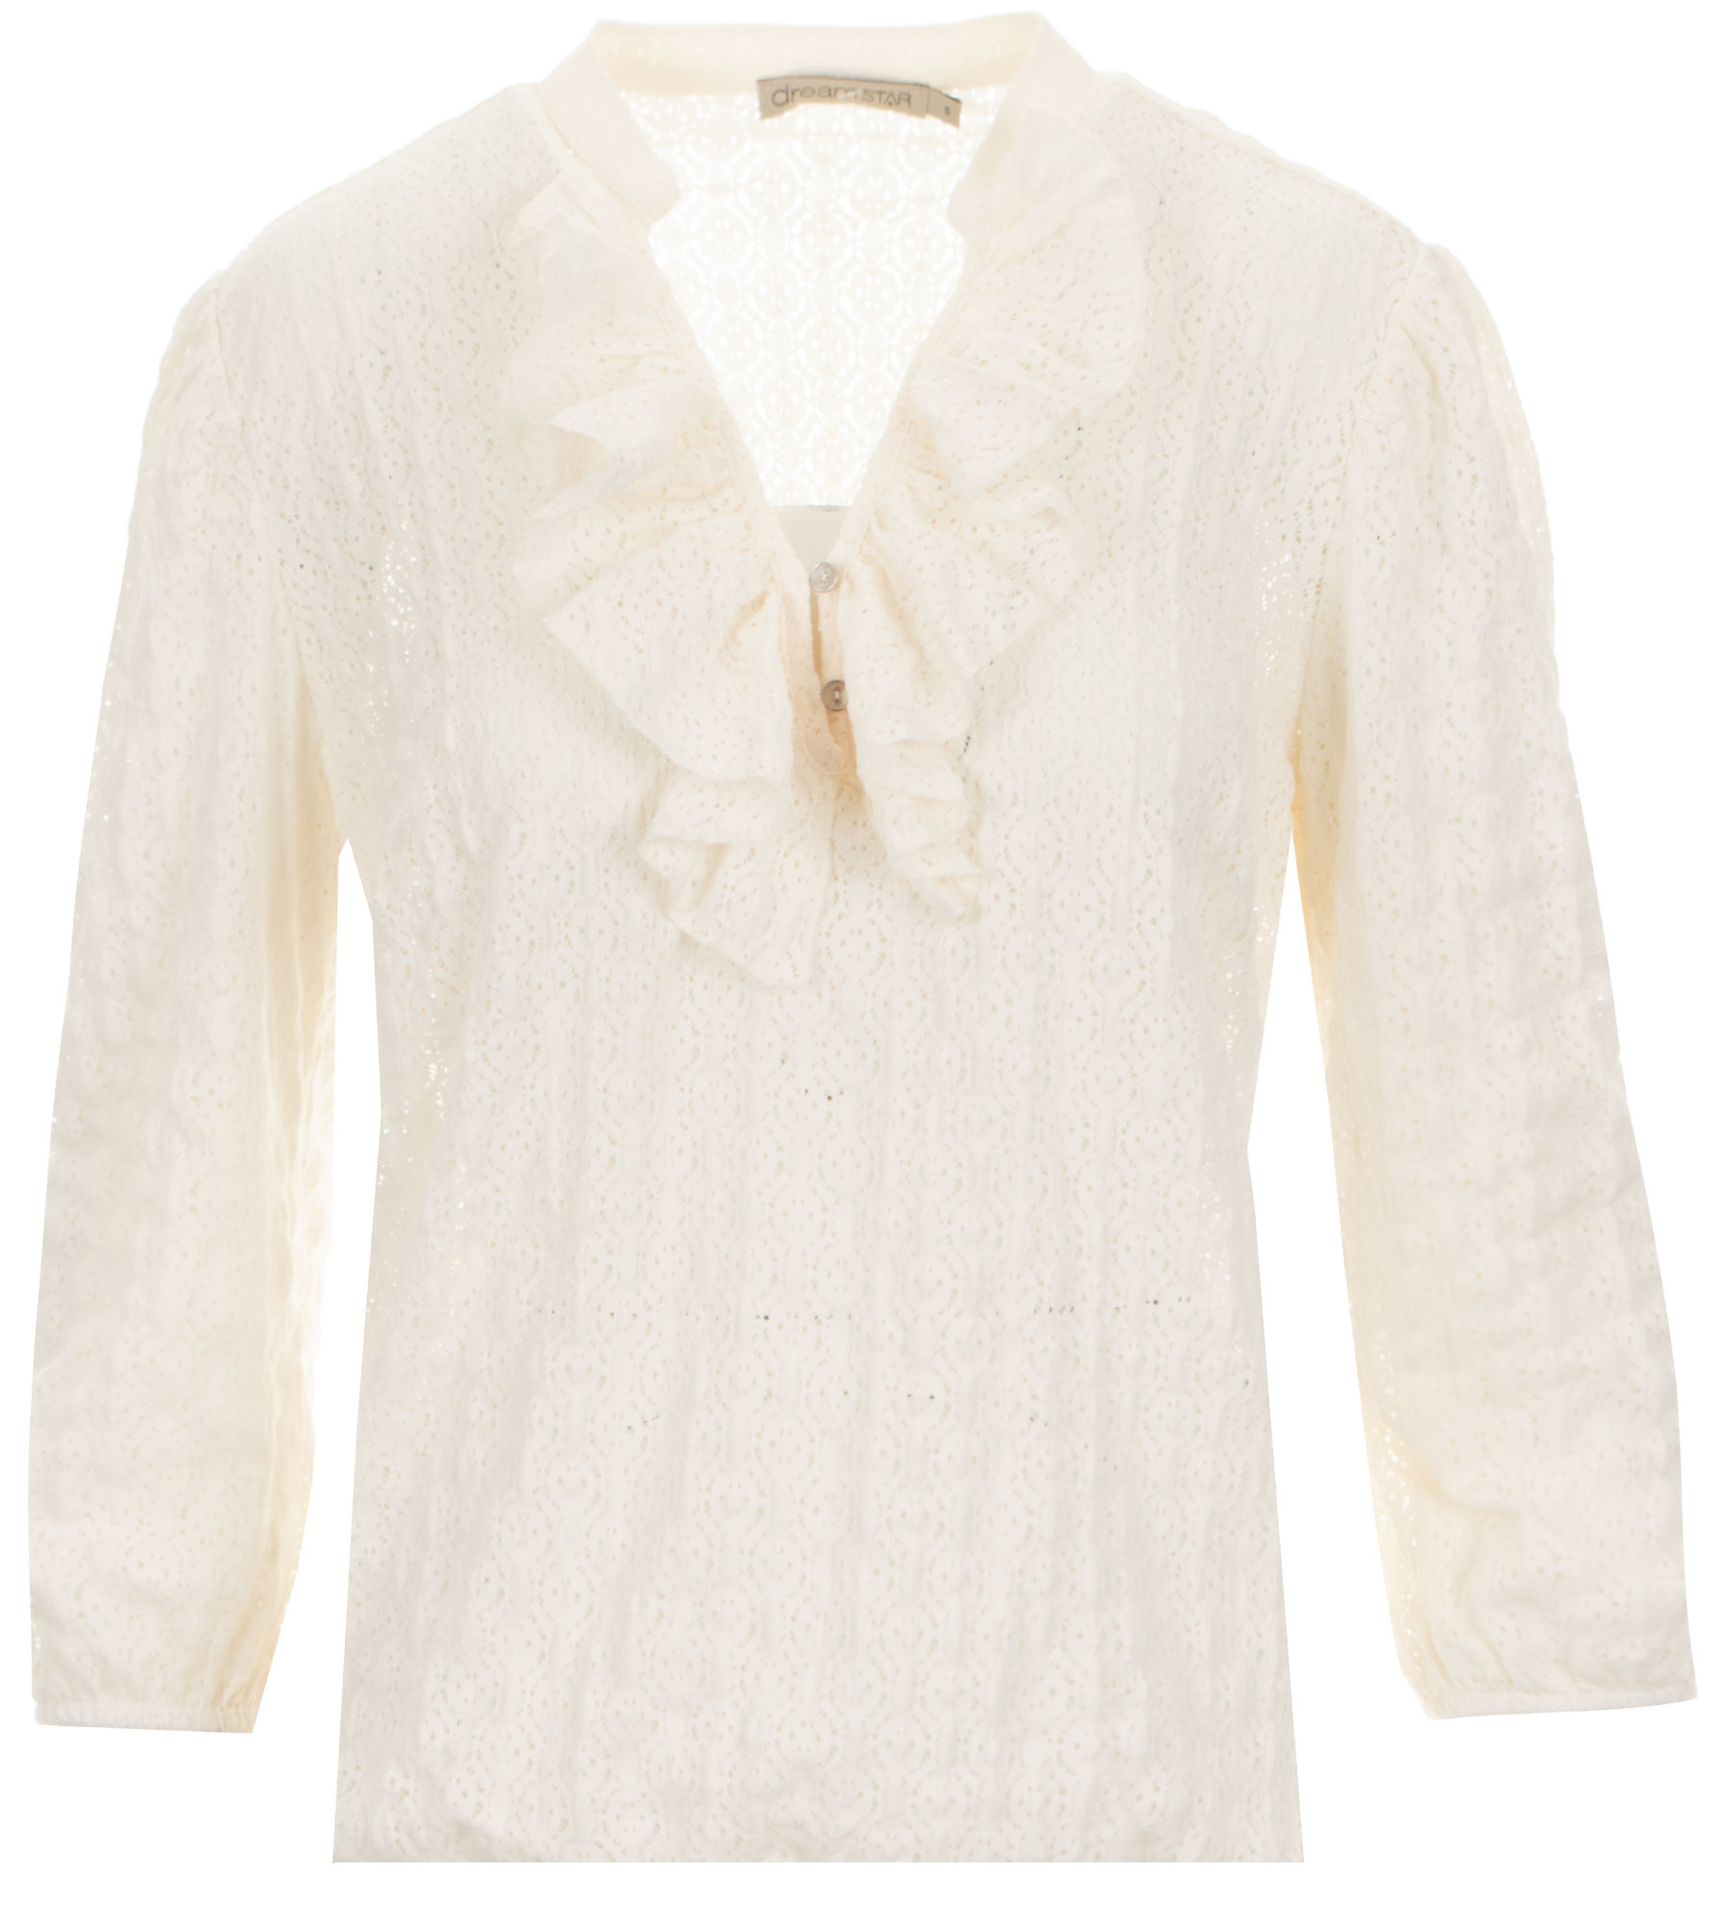 Dreamstar Dreamstar blouse Ciervo Off white 00075060-5000